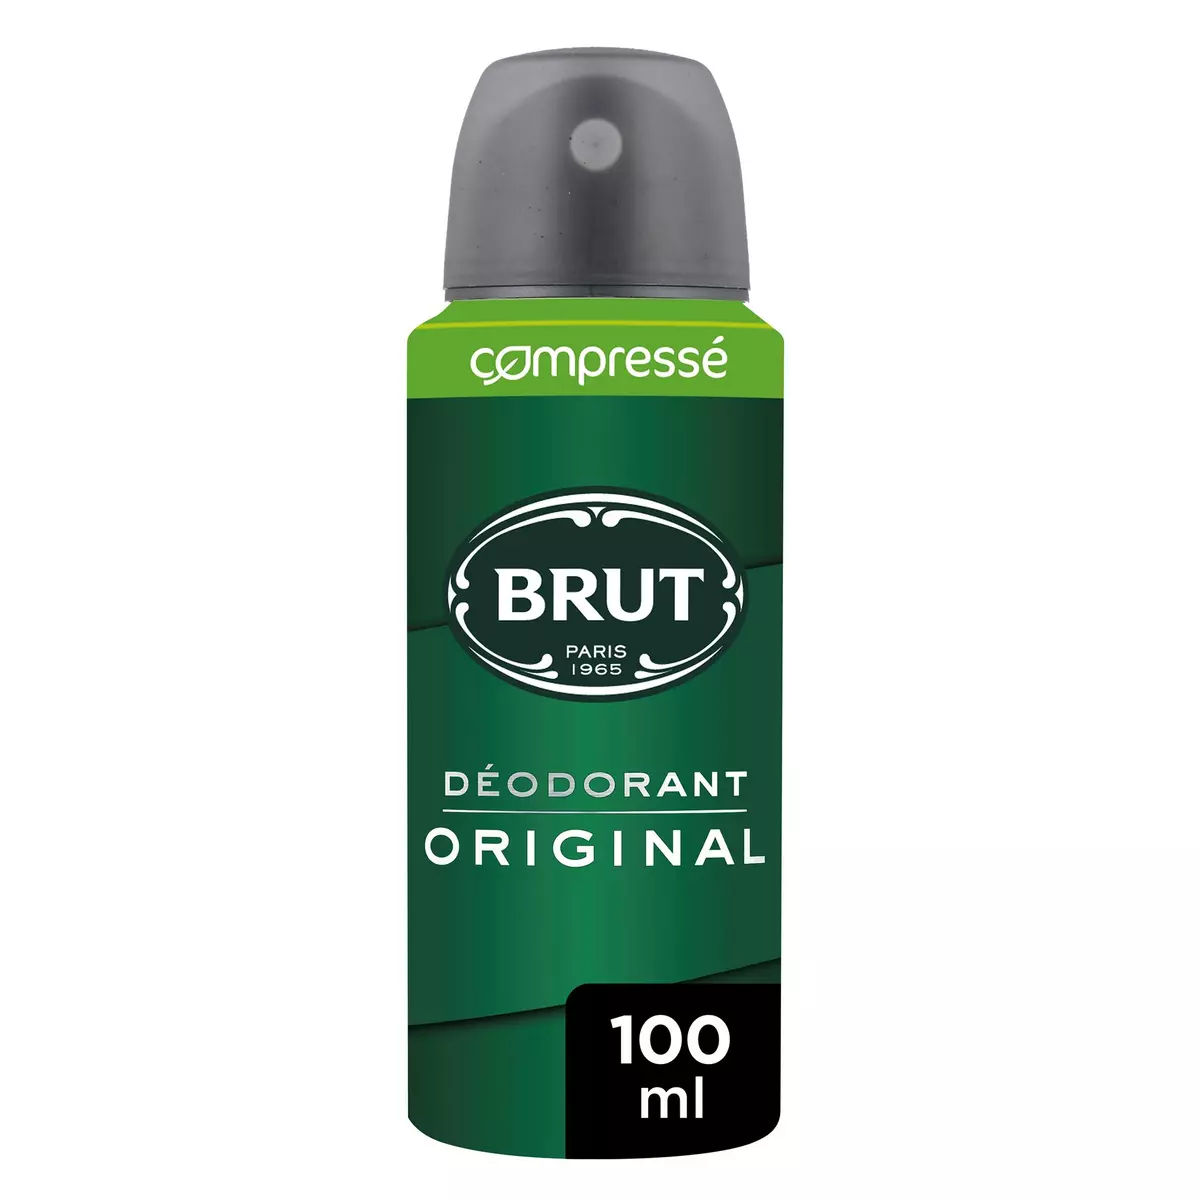 BRUT Original déodorant spray compressé 100ml